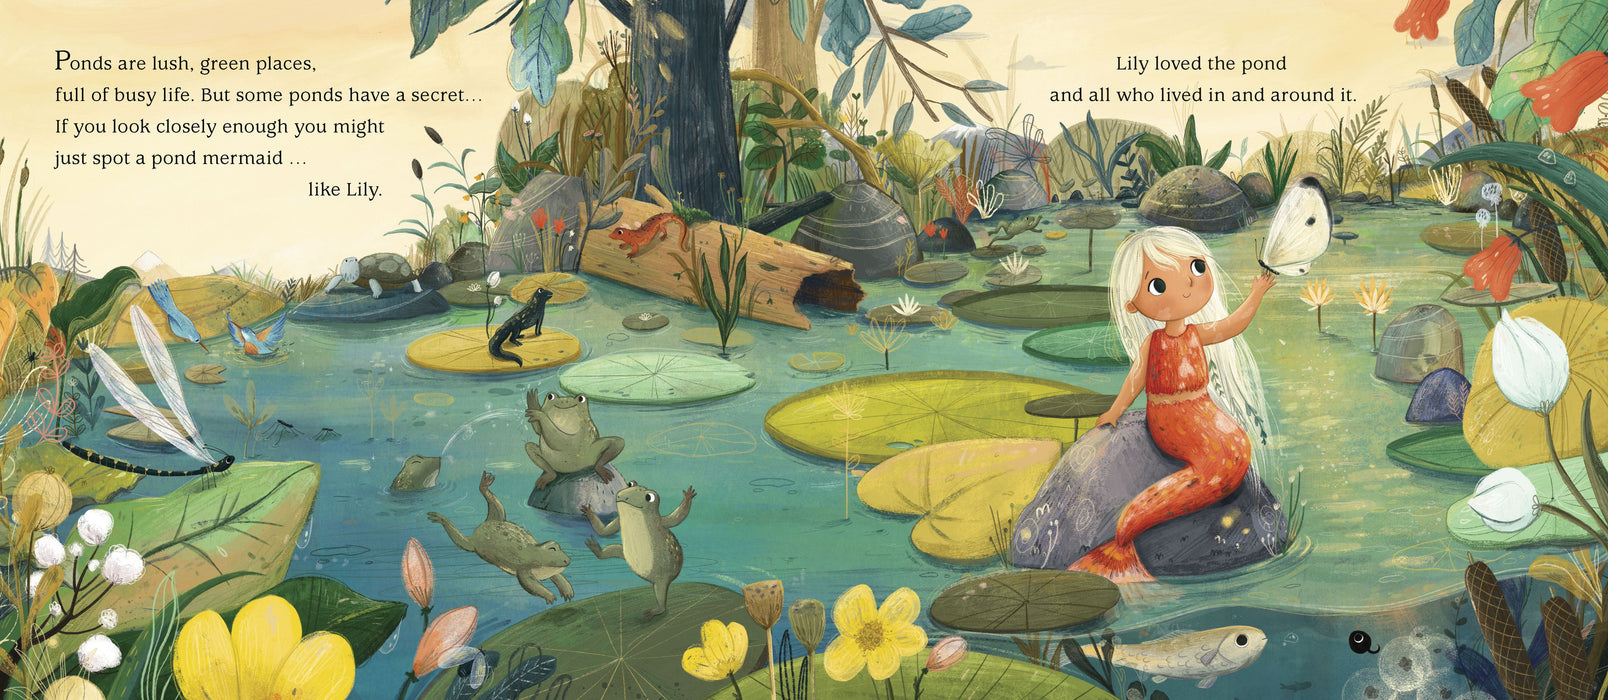 Lily the Pond Mermaid (HB)